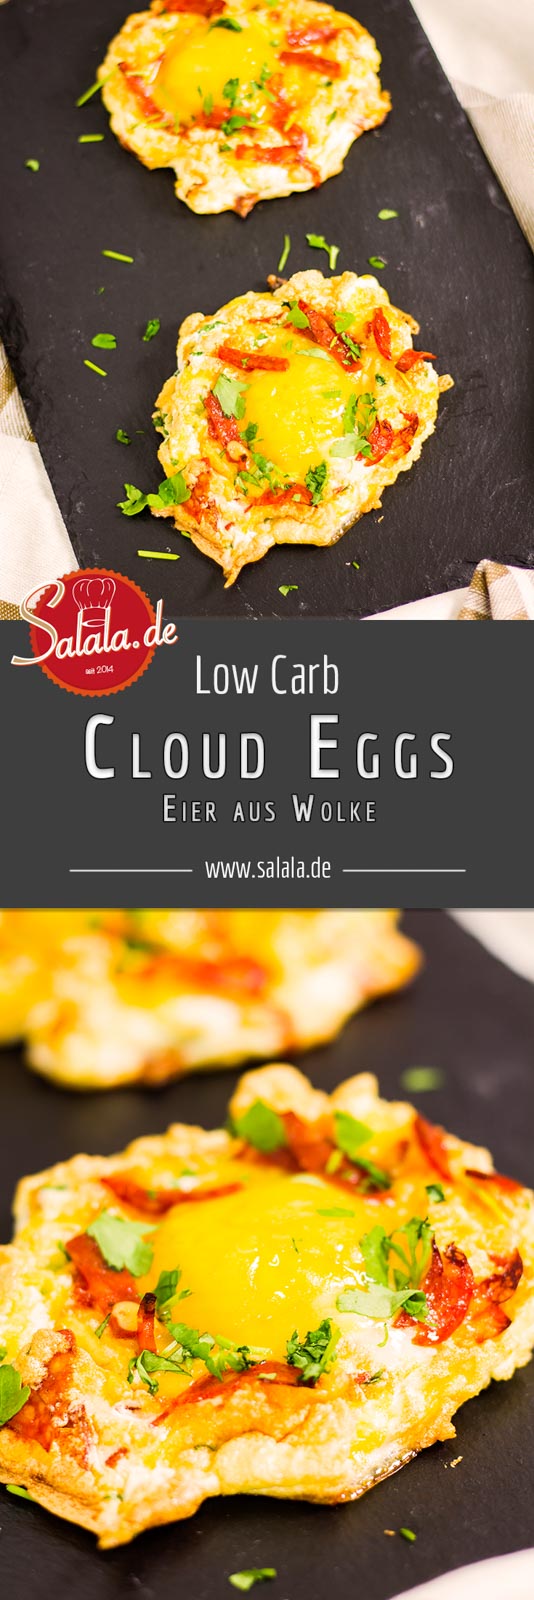 Low Carb Cloud Eggs mit Chorizo - by salala.de - Ketogenes Frühstück mit Ei und Käse selber machen